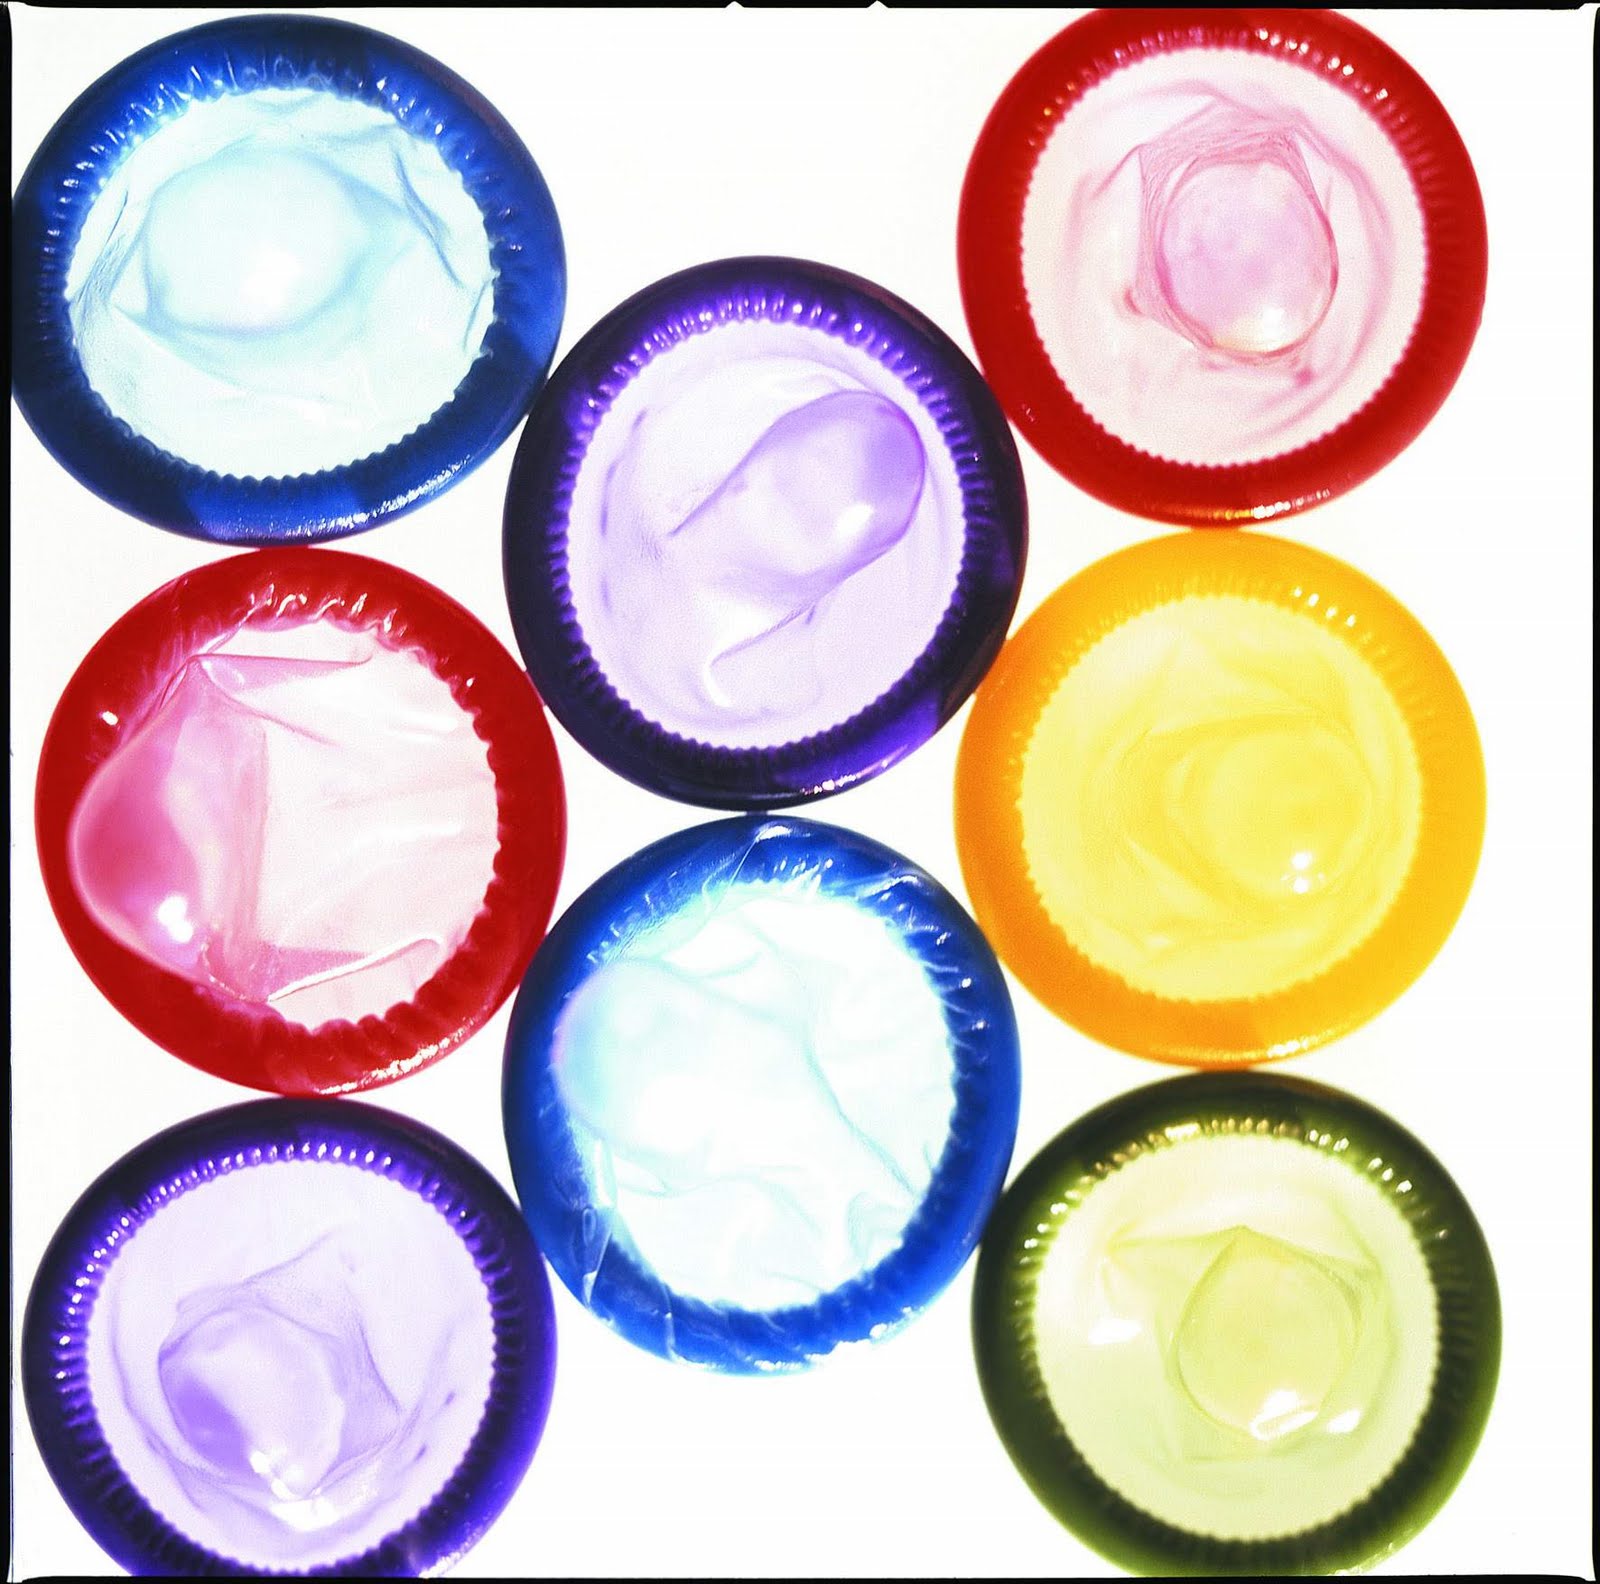 http://3.bp.blogspot.com/_cSWTPmUPUew/SwwnA6TtBHI/AAAAAAAAAkc/B-pRoxjJlLo/s1600/KondomScan.jpg